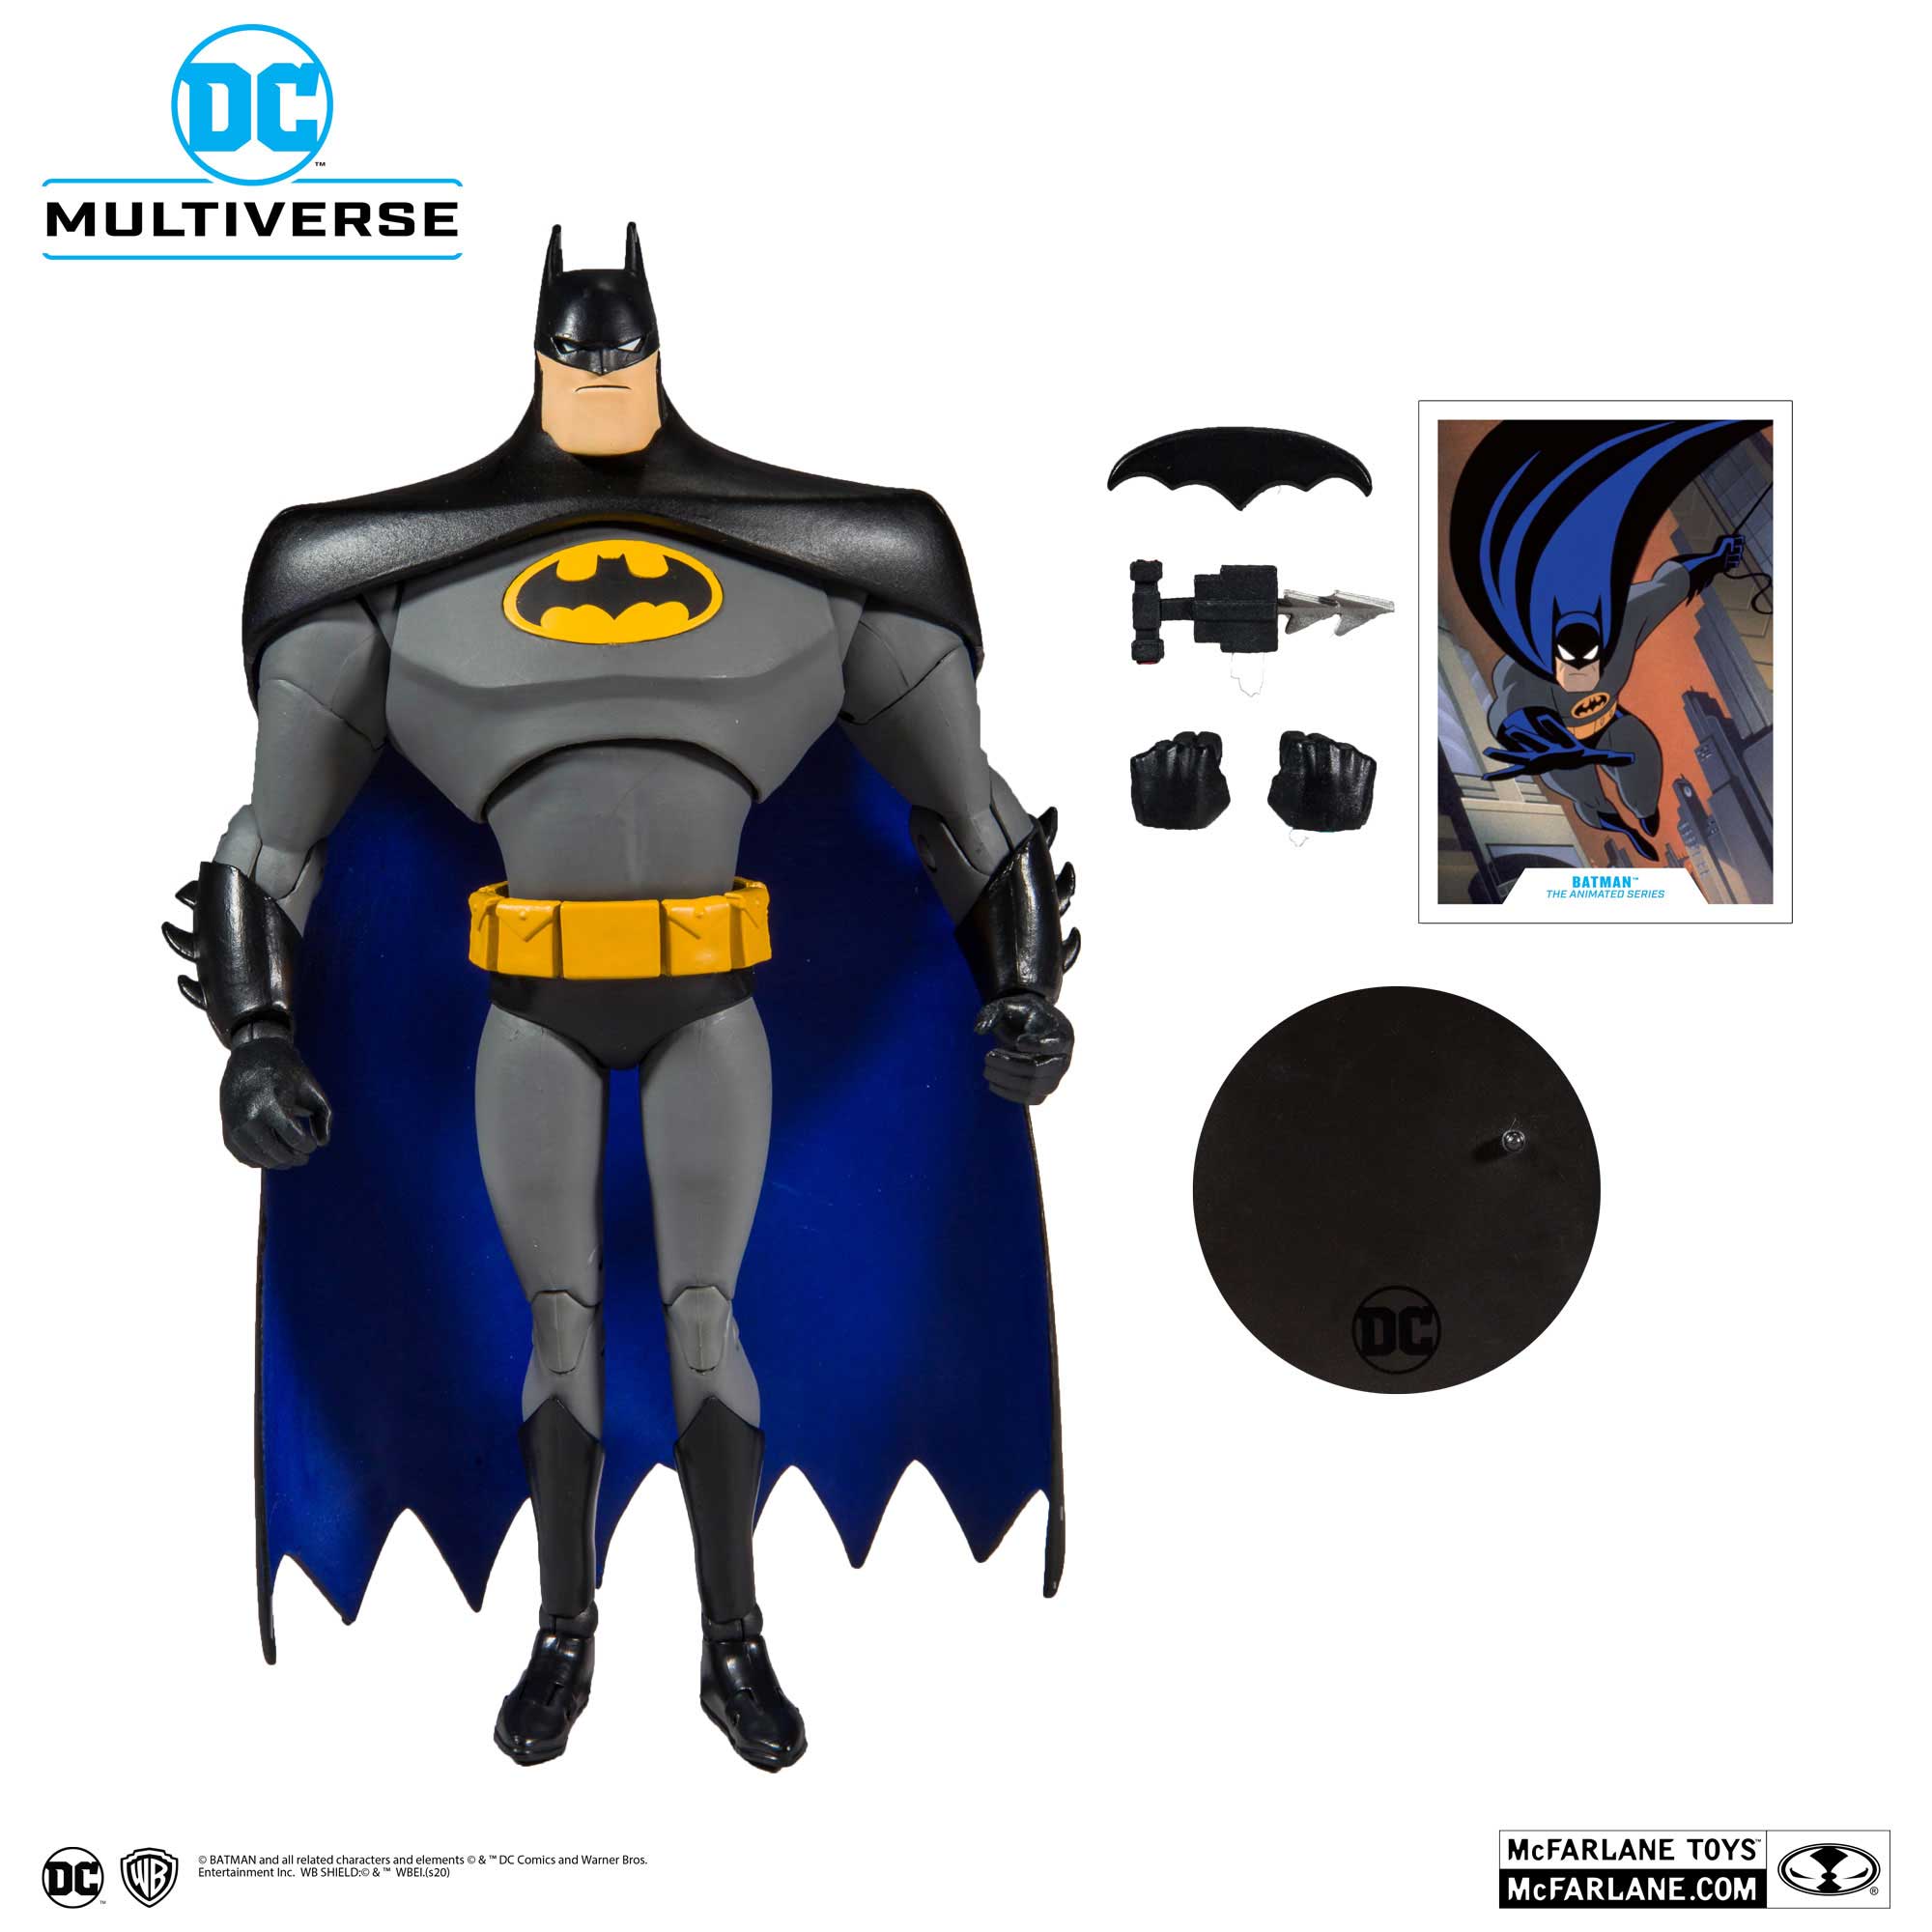 DC Multiverse Batman Animated Series - McFarlane Toys - 0